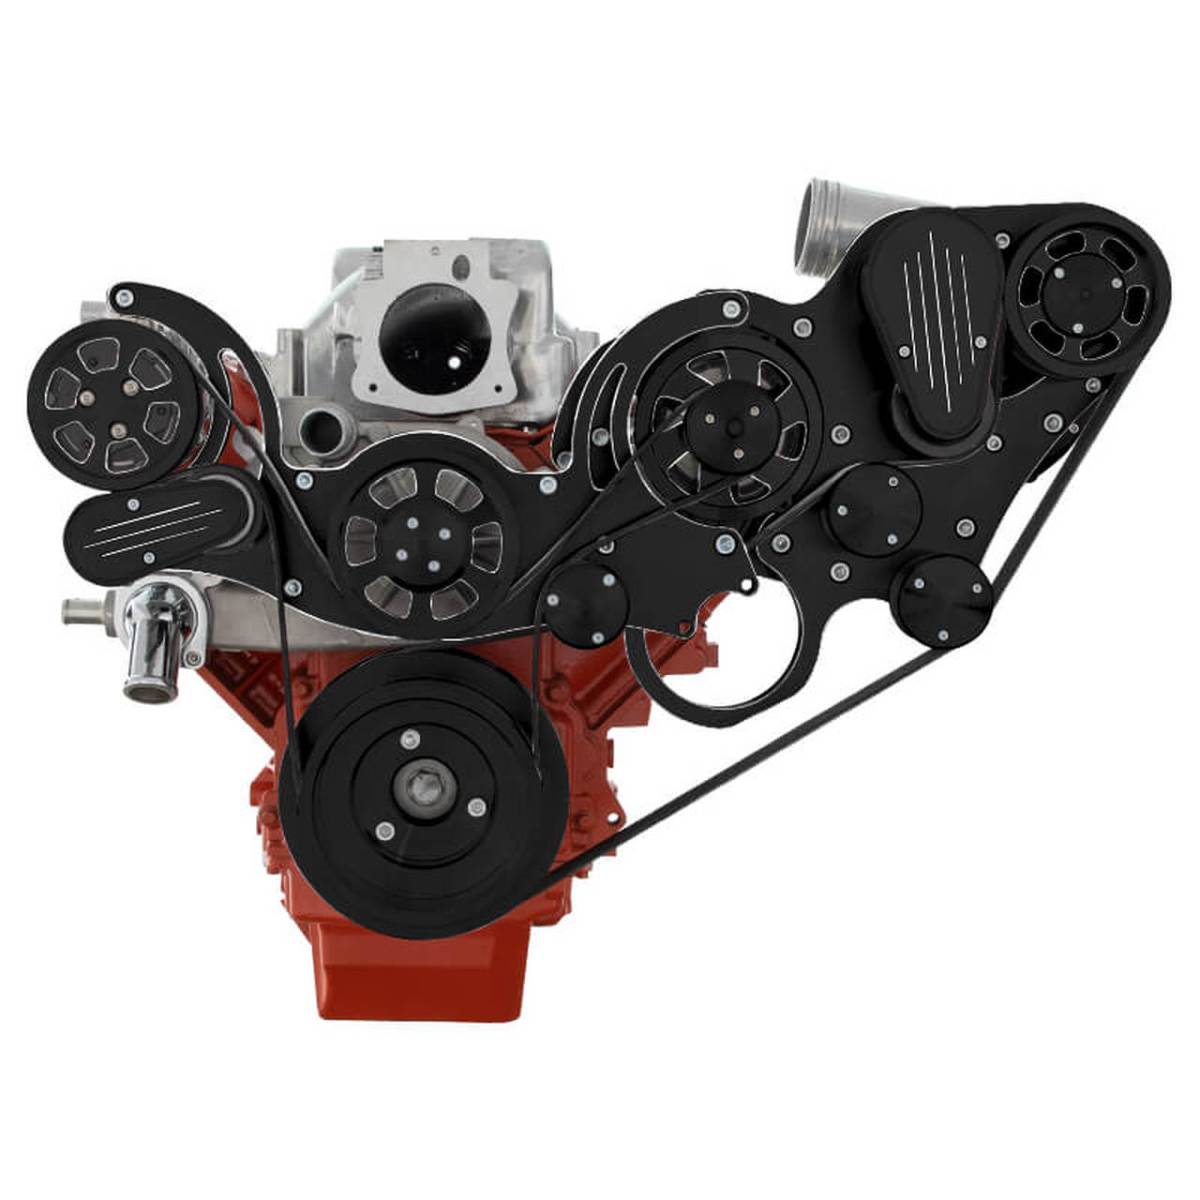 CVF Racing - CVF Wraptor Chevy LS Engine Procharger Serpentine Bracket System with Alternator AC and Power Steering - Black Diamond Finish - Image 1